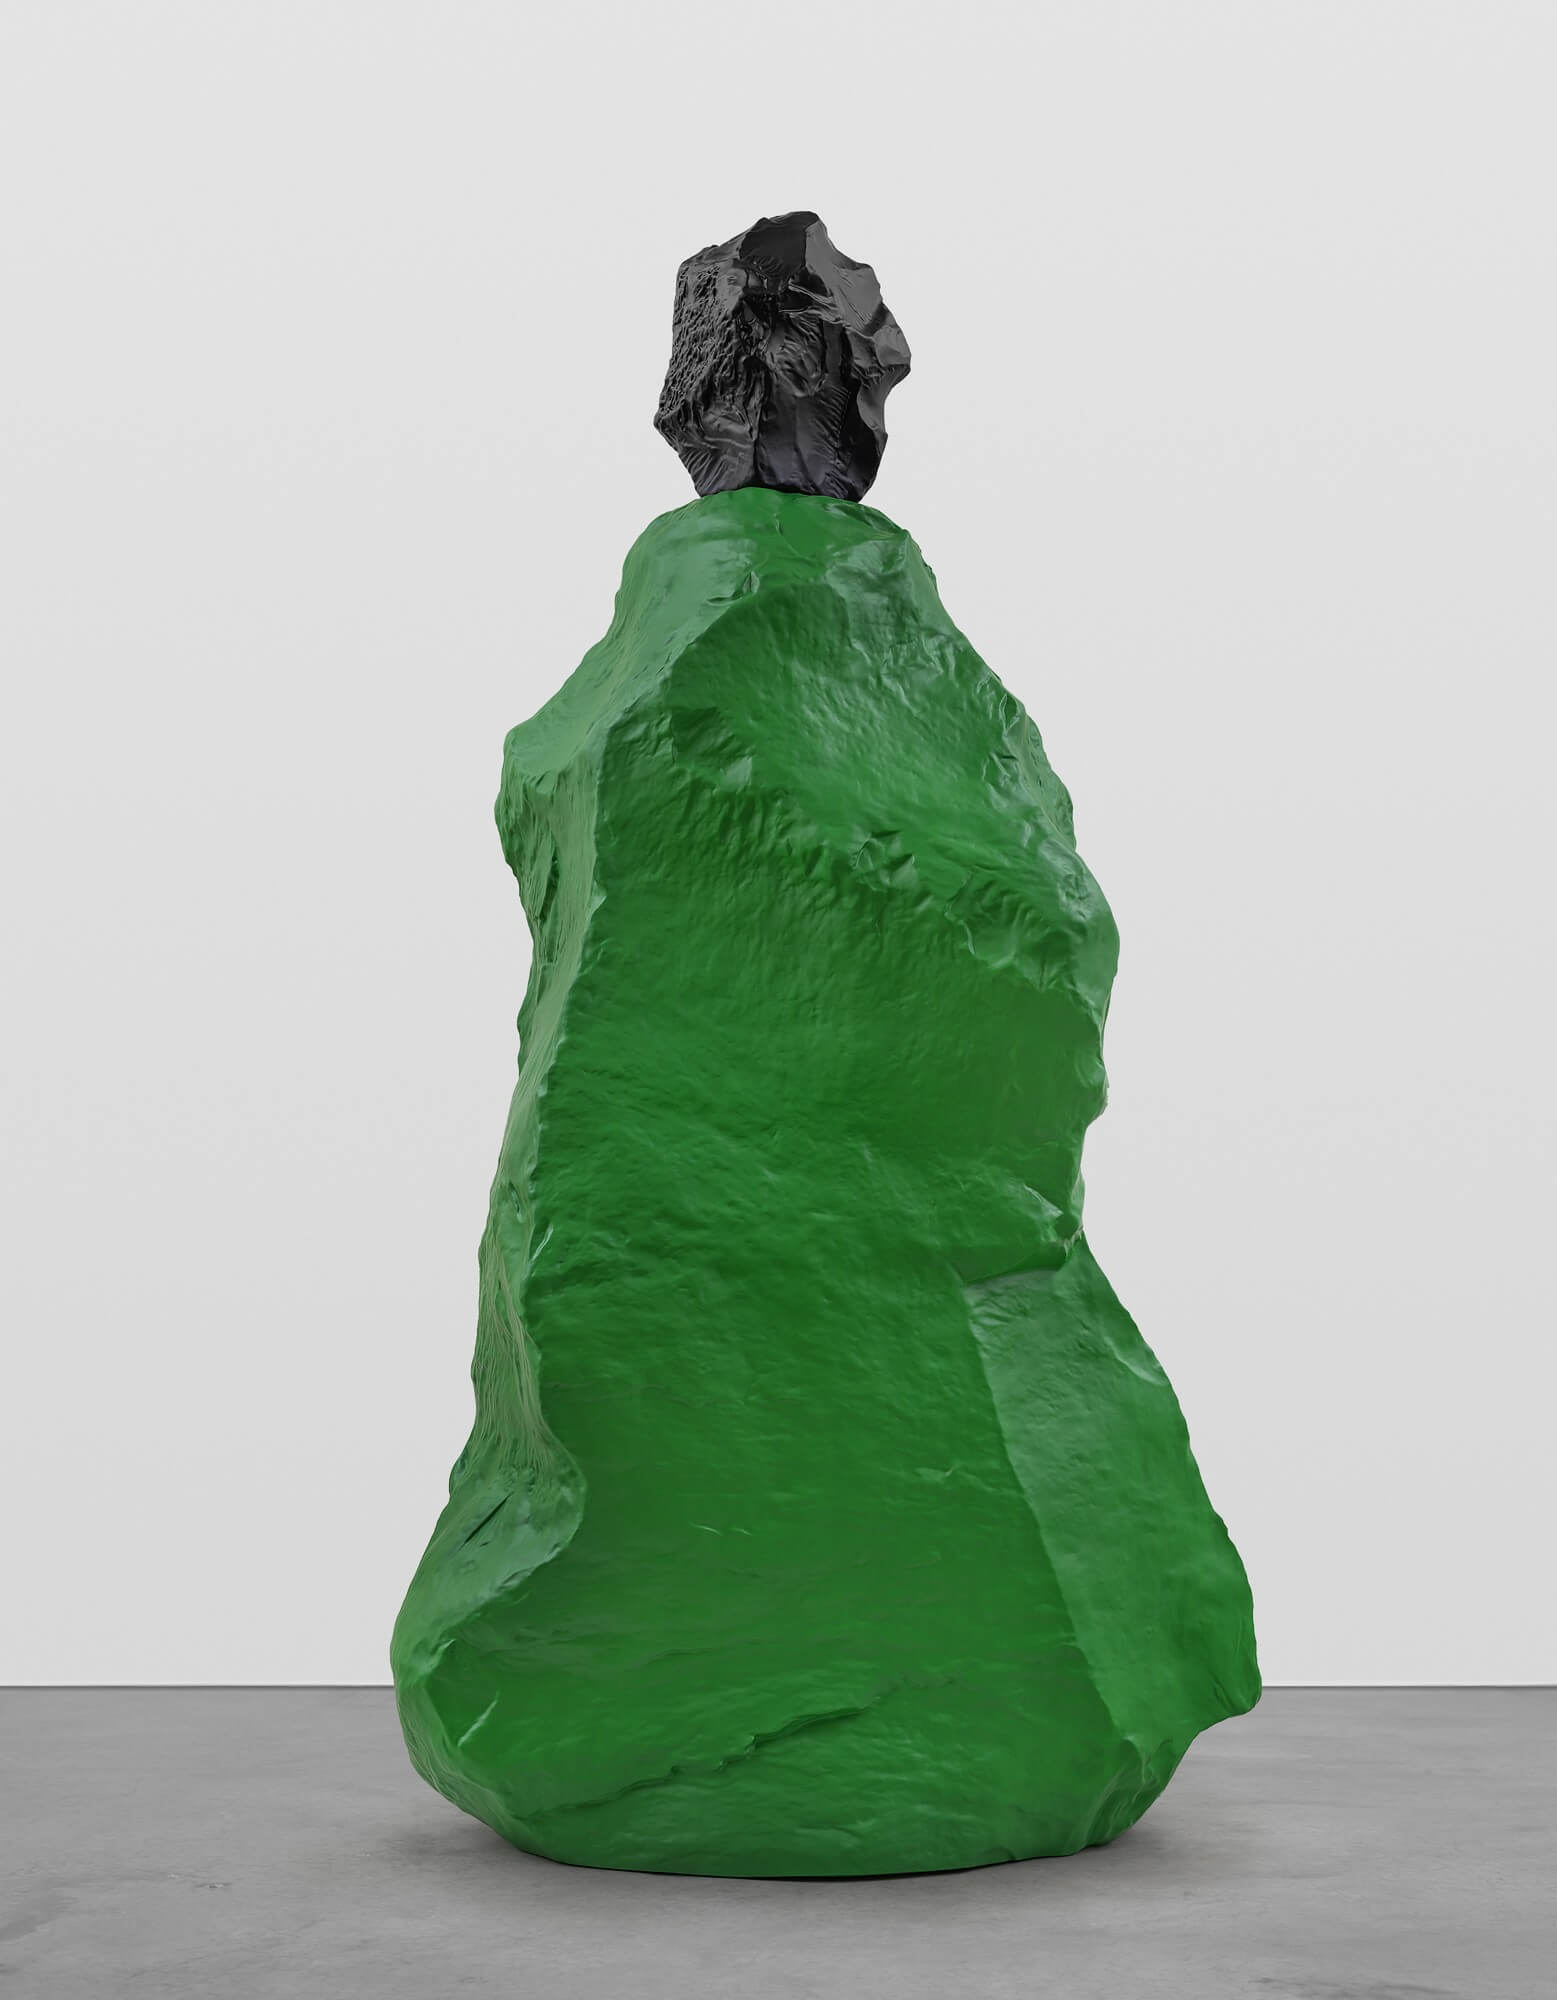 black green monk | UGO RONDINONE